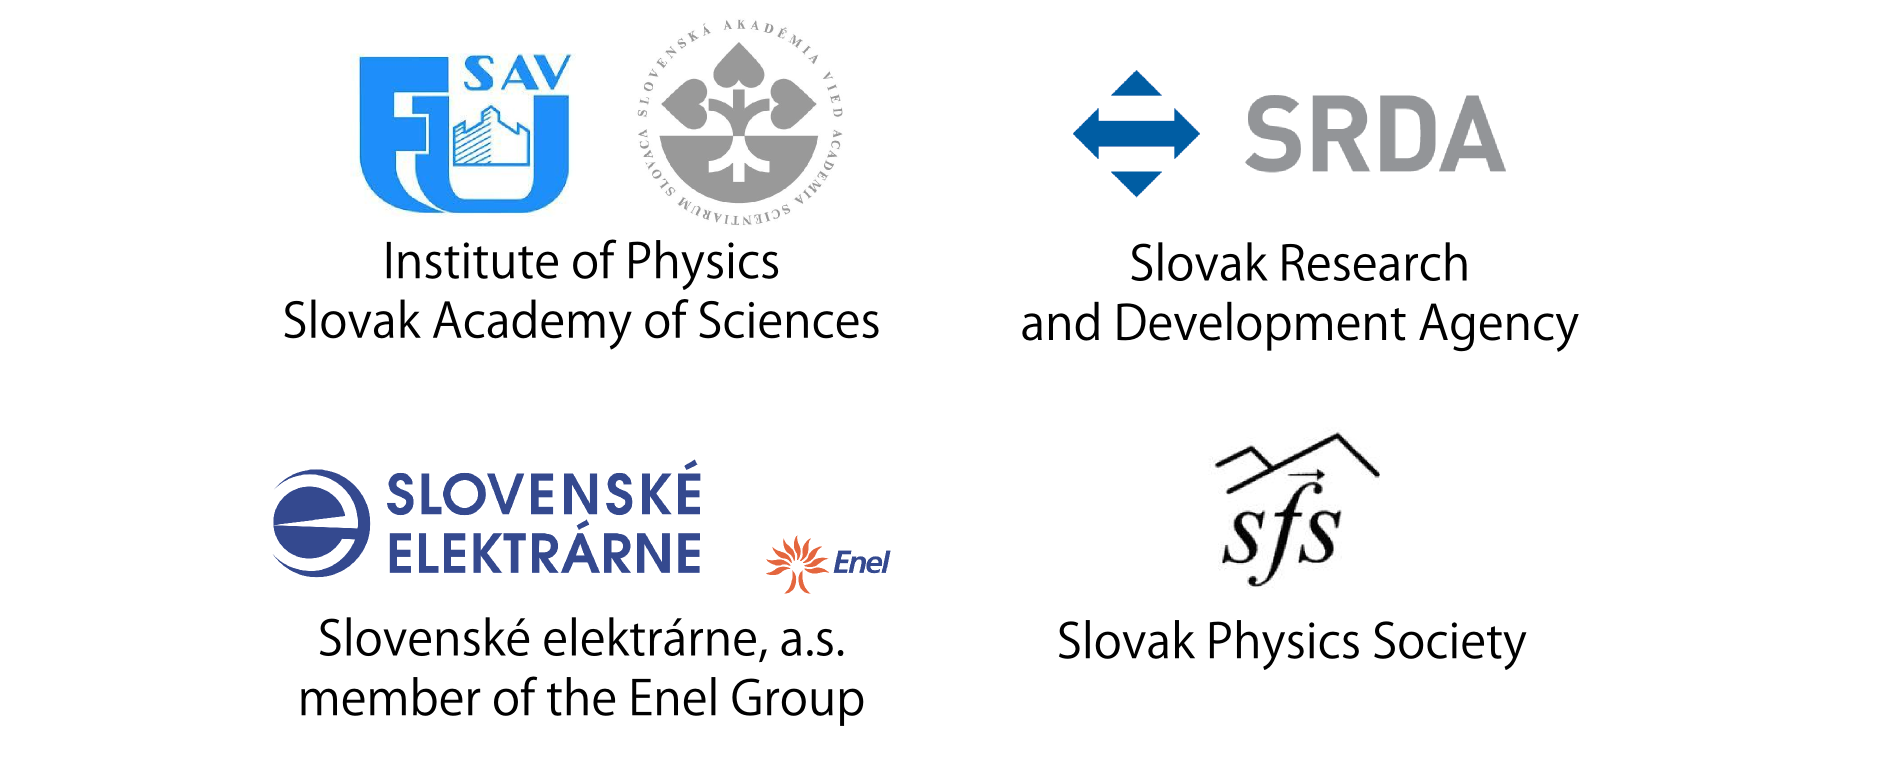 Institute of Physics SAS, Slovak Physics Society, Slovak Research and Development Agency